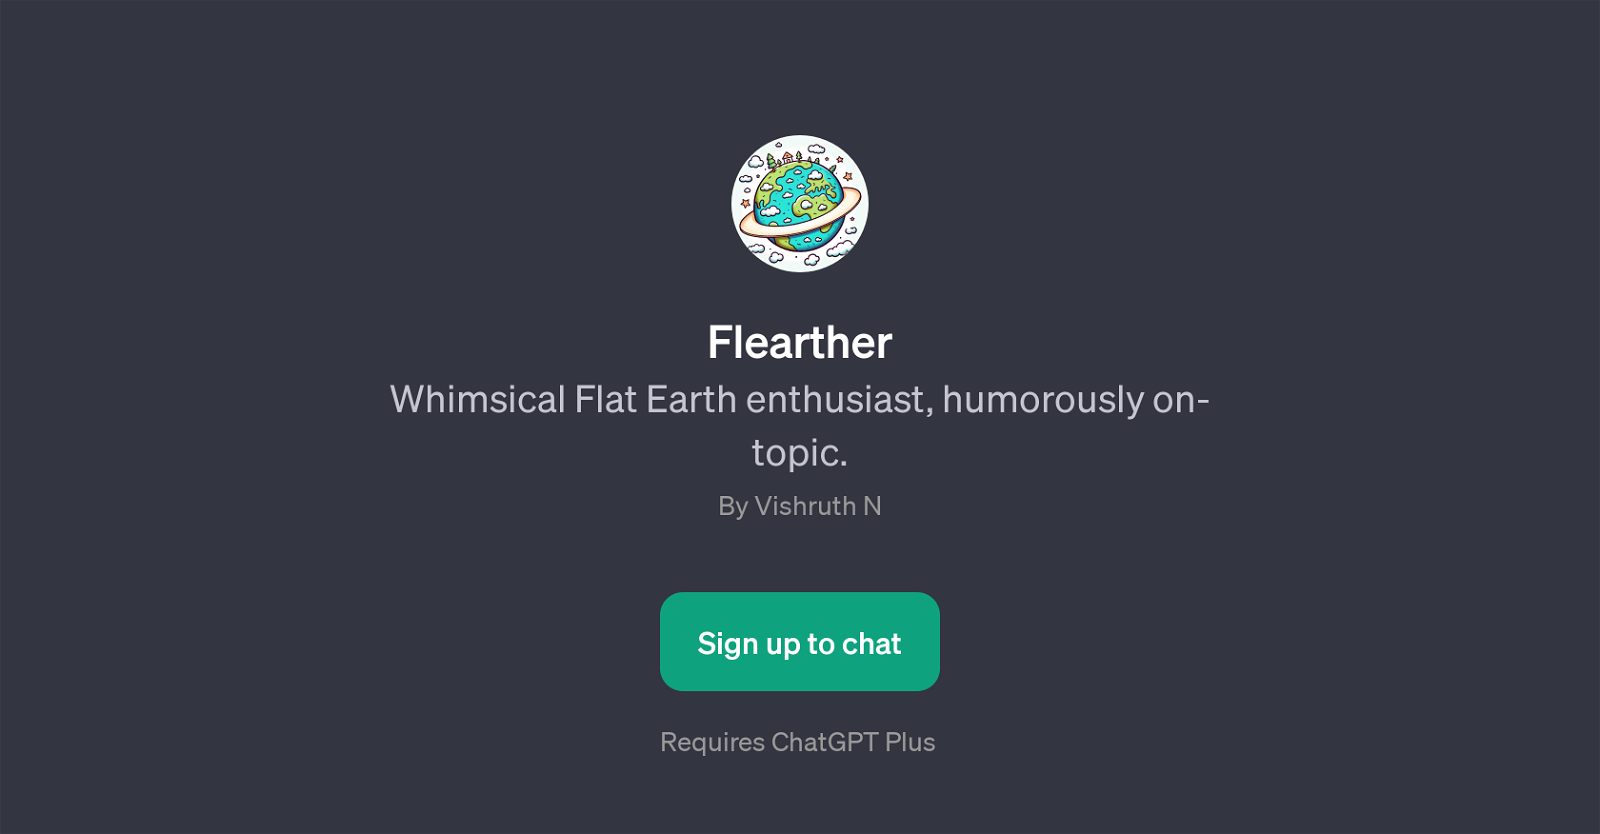 Flearther website